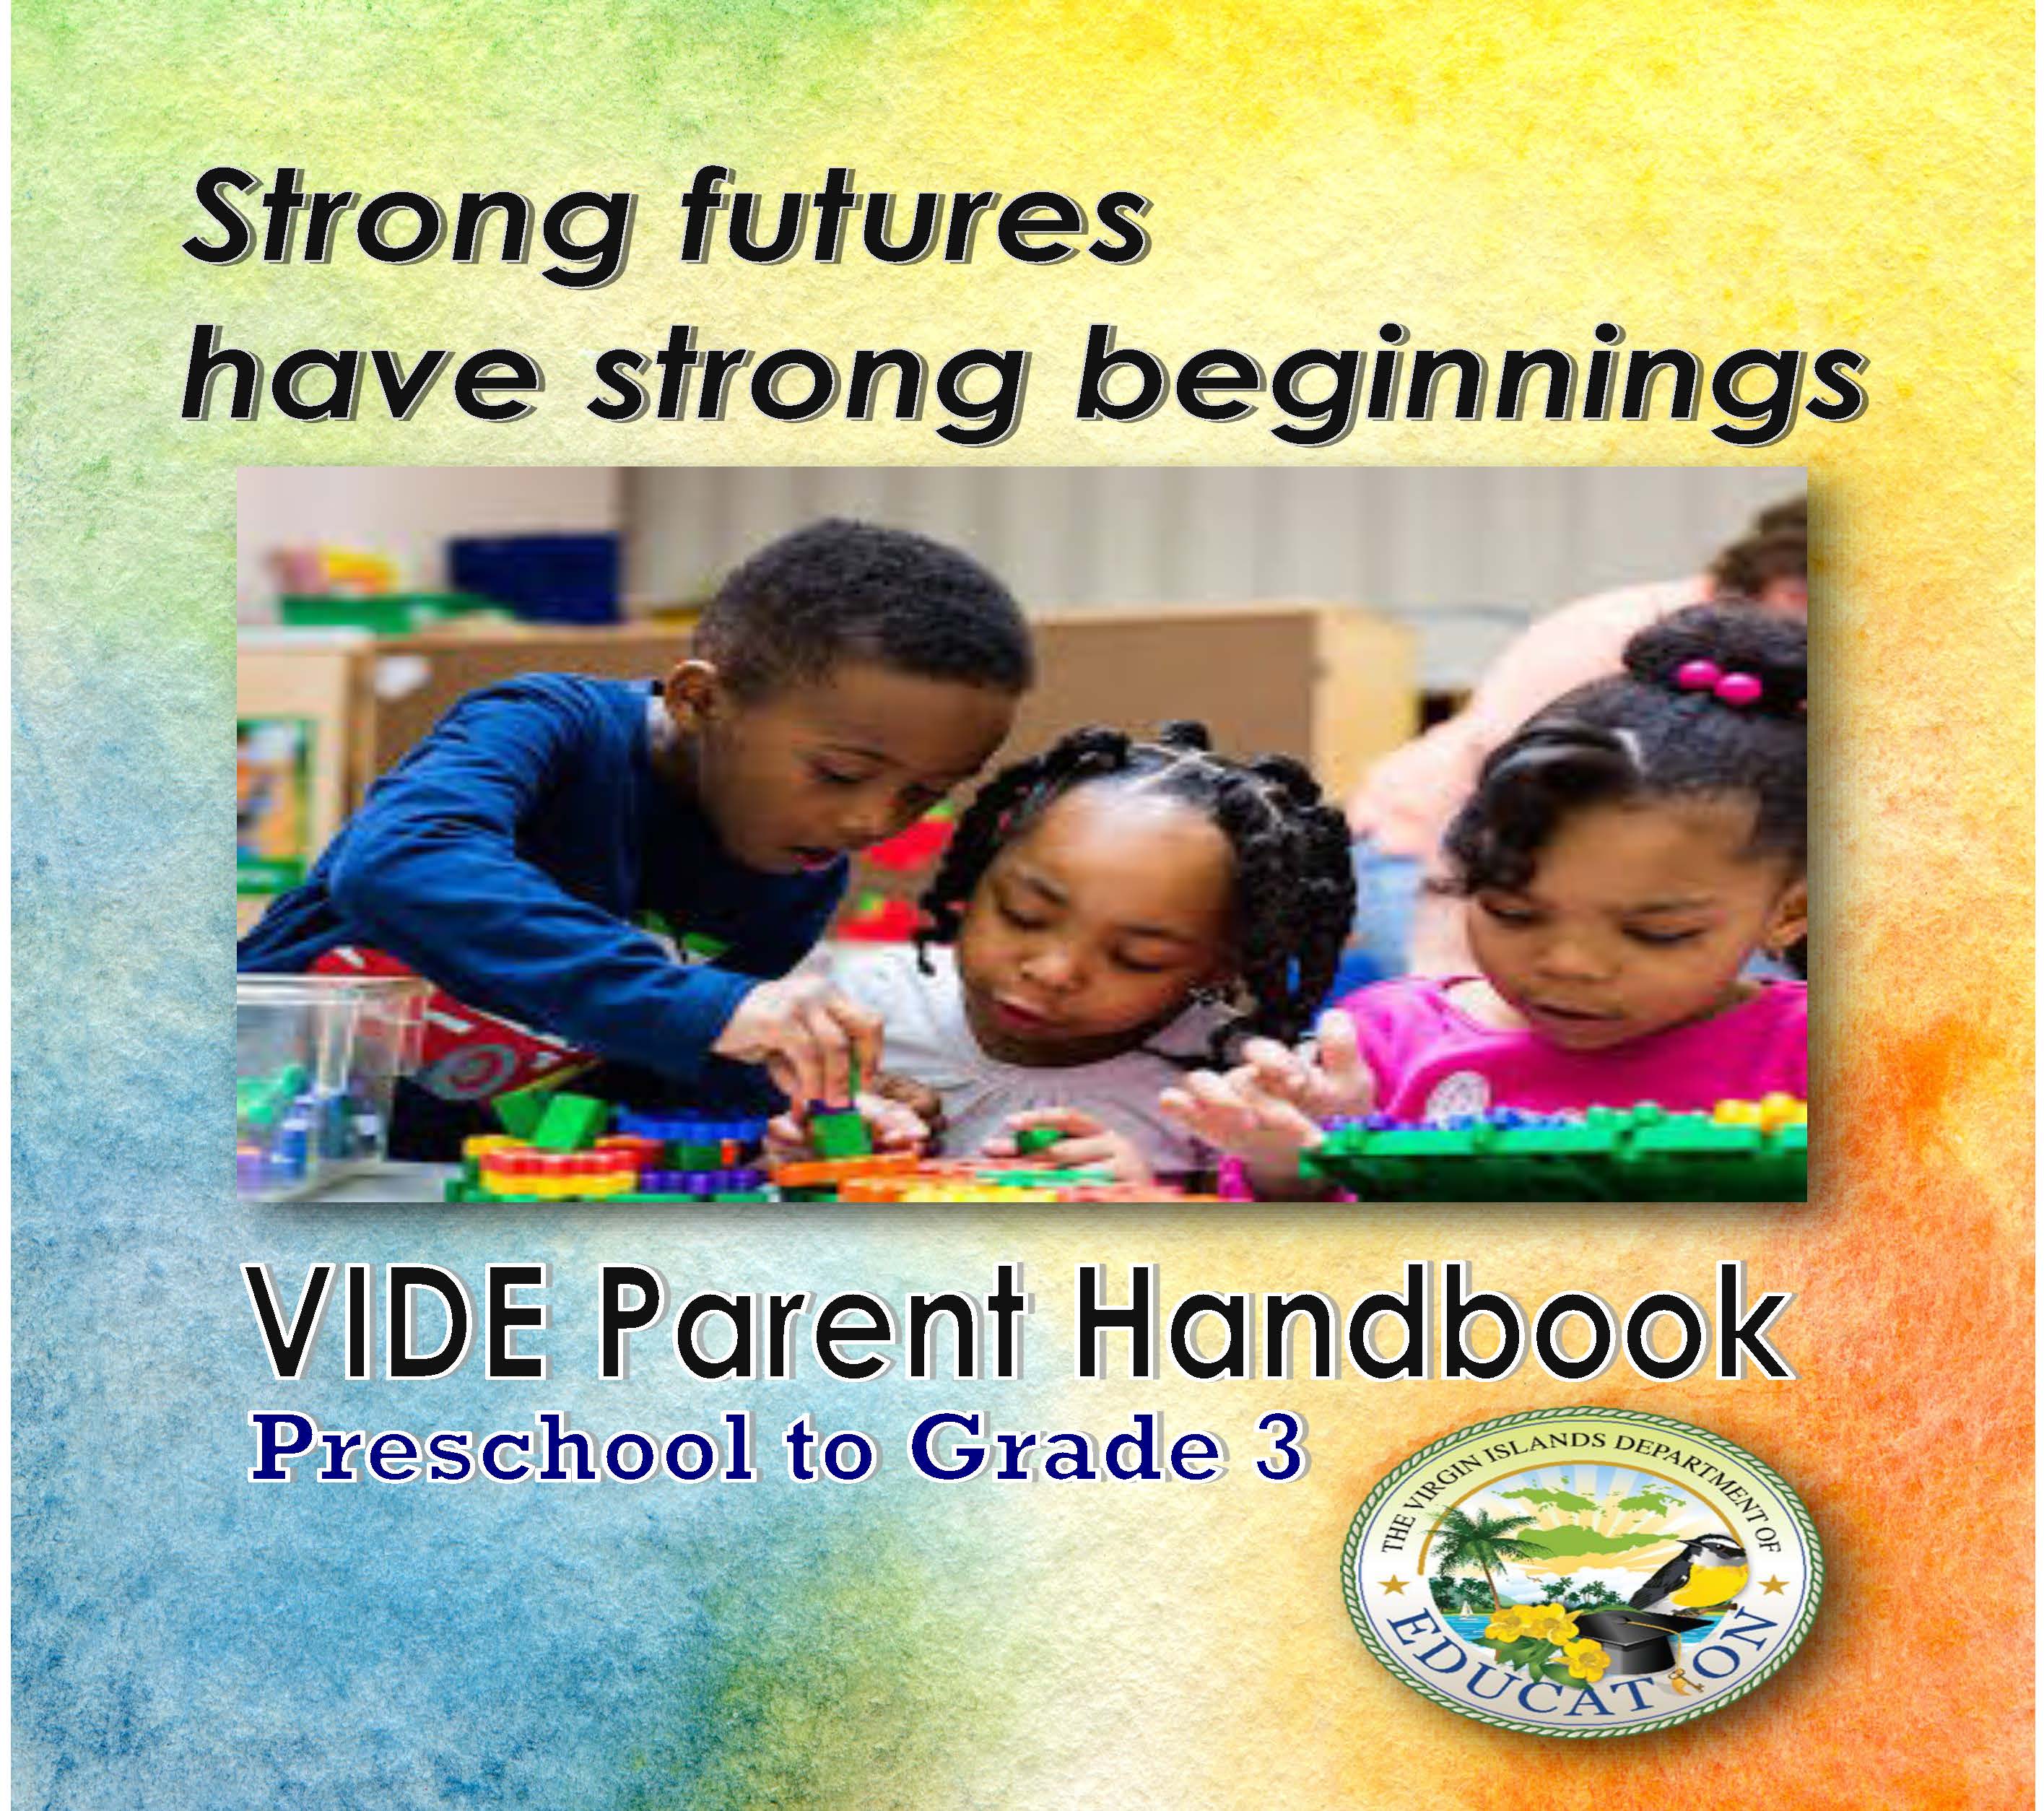 VIDE Parent Handbook: Preschool to Grade 3